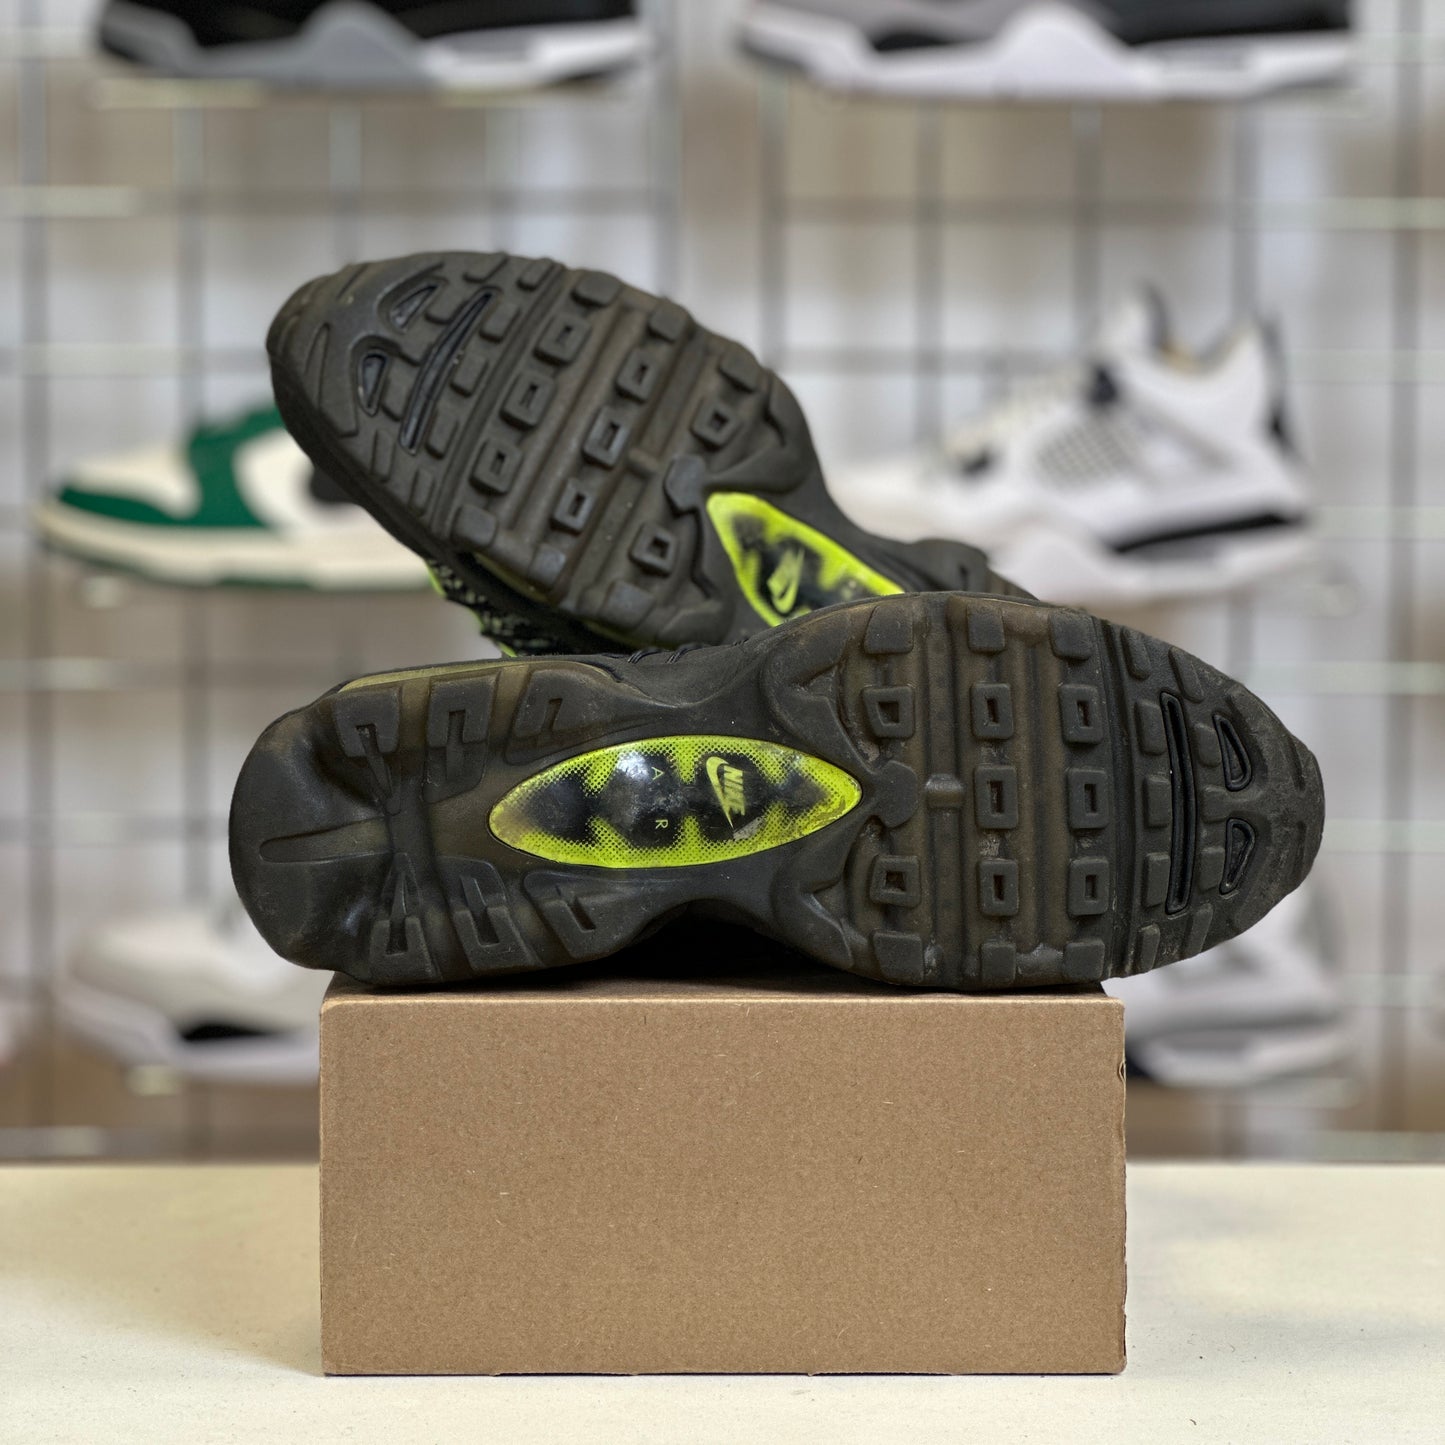 Nike Air Max 95 Jacquard 'Black Volt' UK8 (No Box)